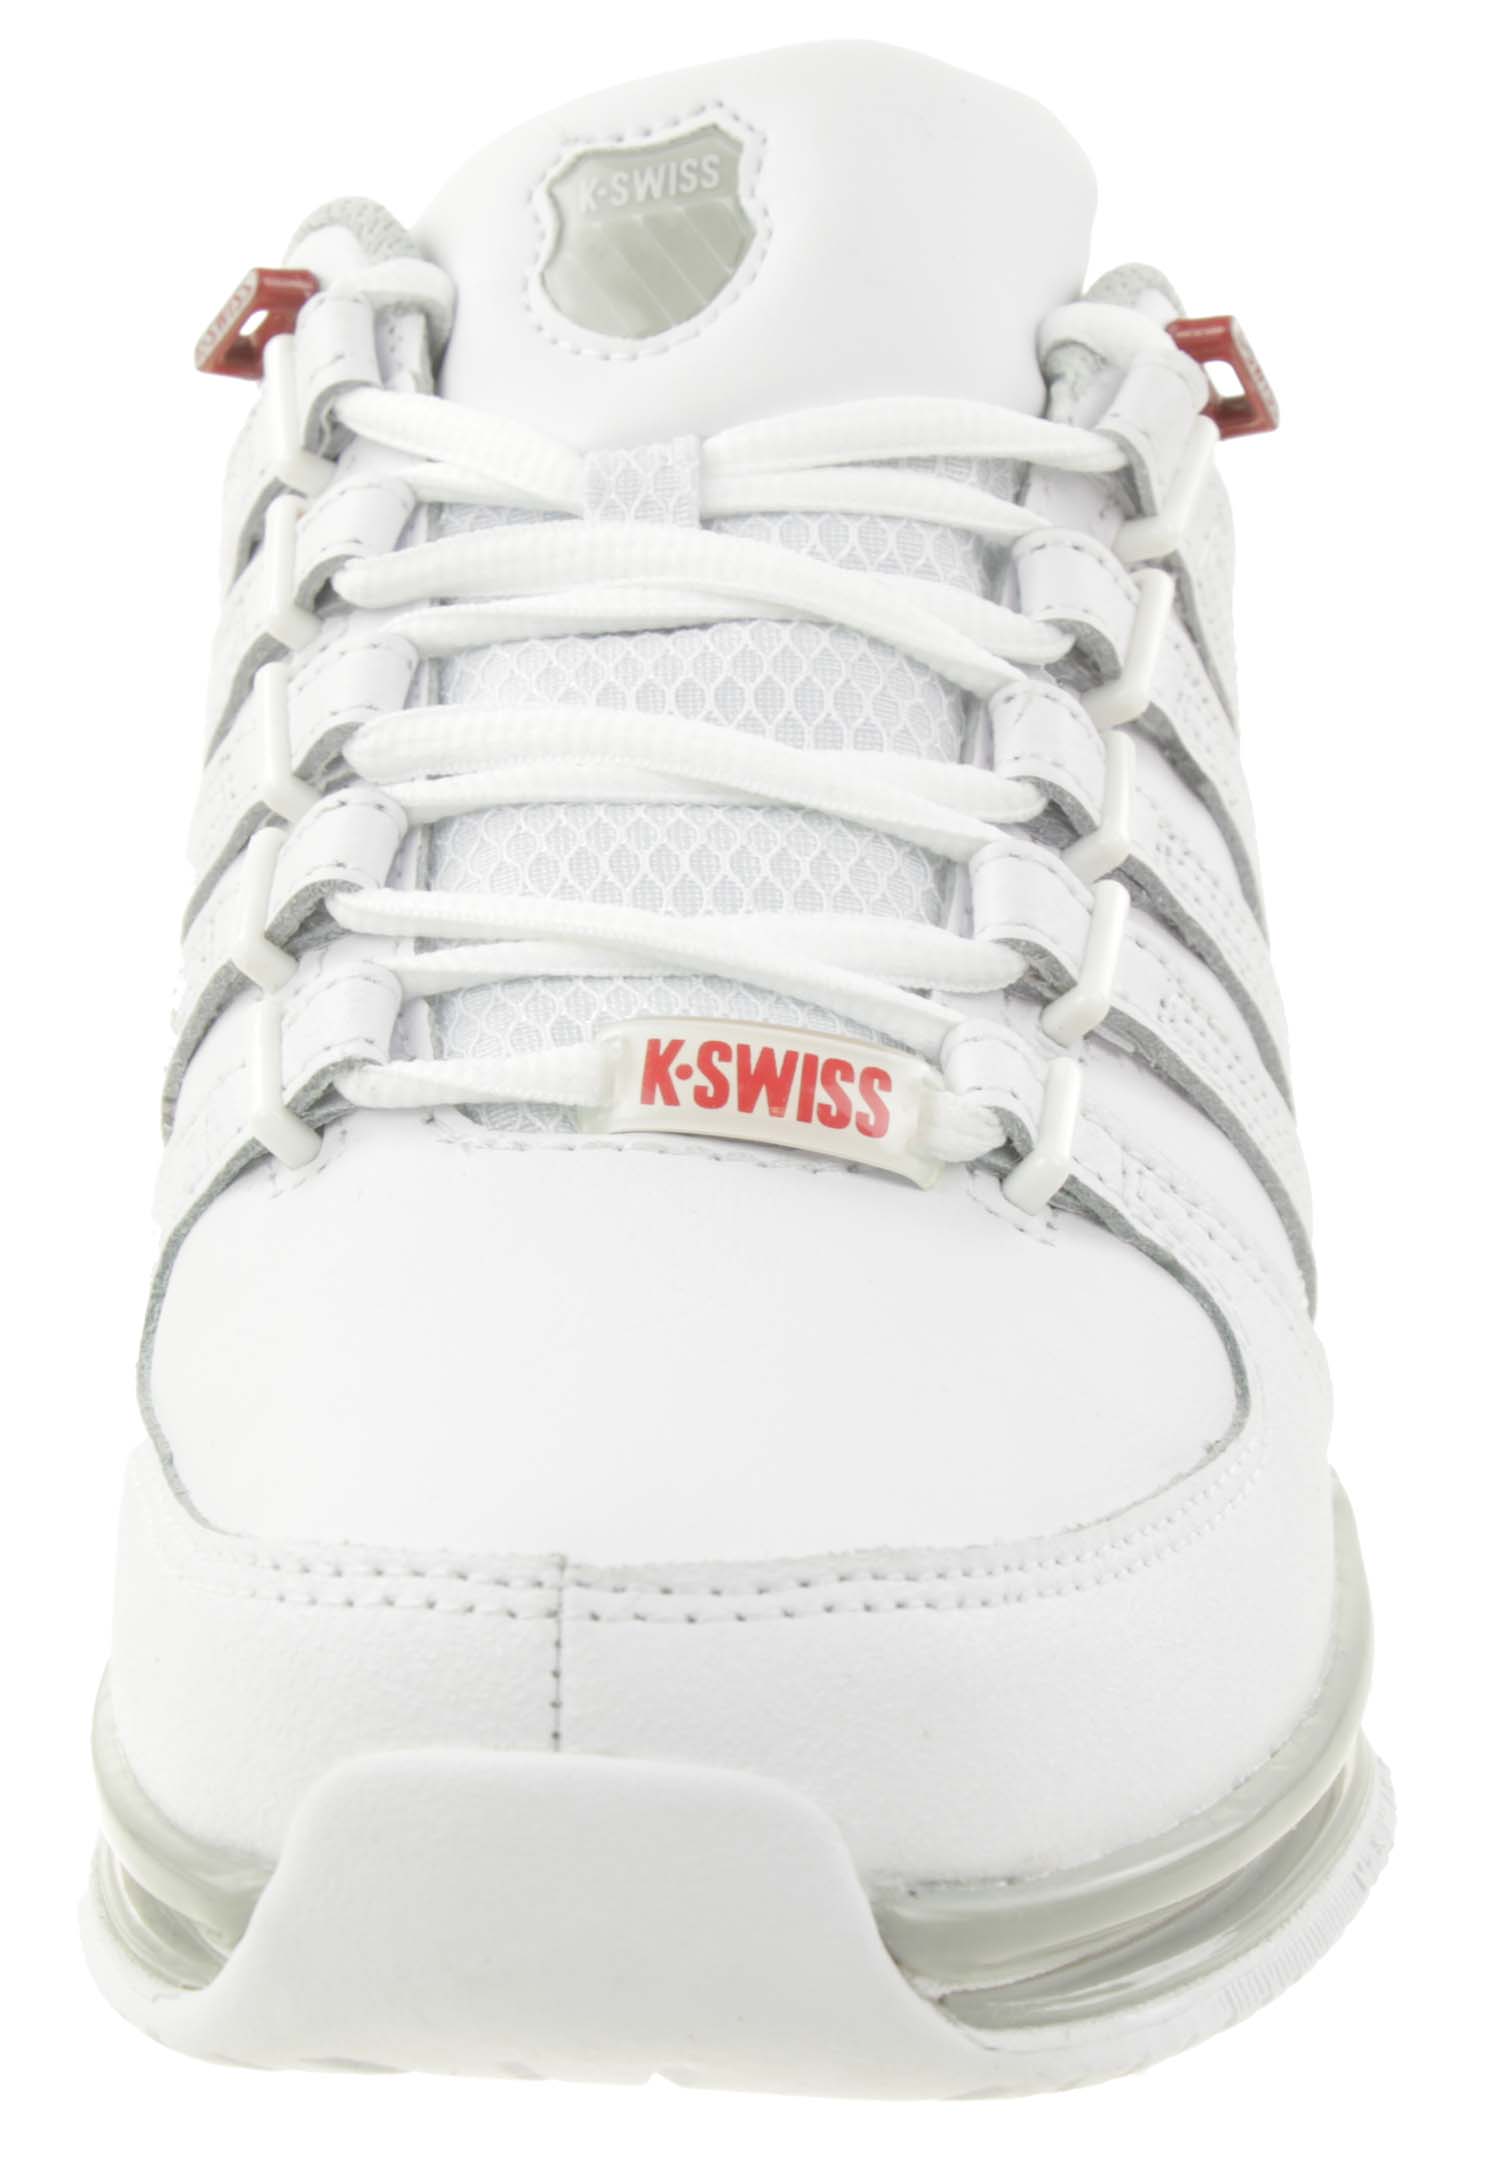 K-Swiss Rinzler Herren Sneaker Sportschuh 01235-192-M weiss rot